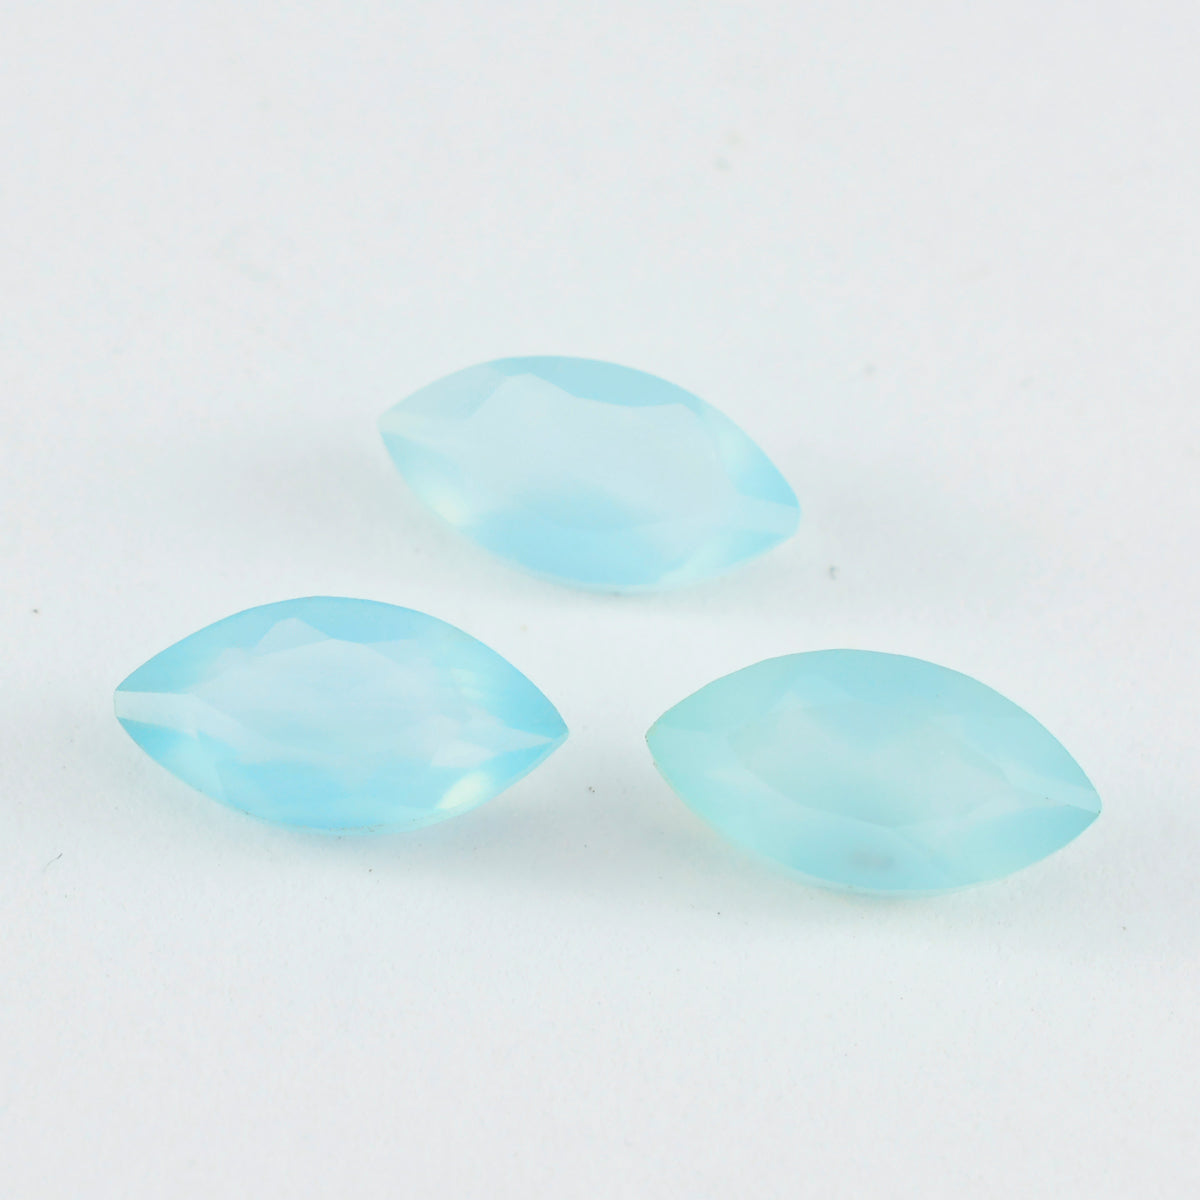 Riyogems 1PC Real Aqua Chalcedony Faceted 11x22 mm Marquise Shape beautiful Quality Loose Gems